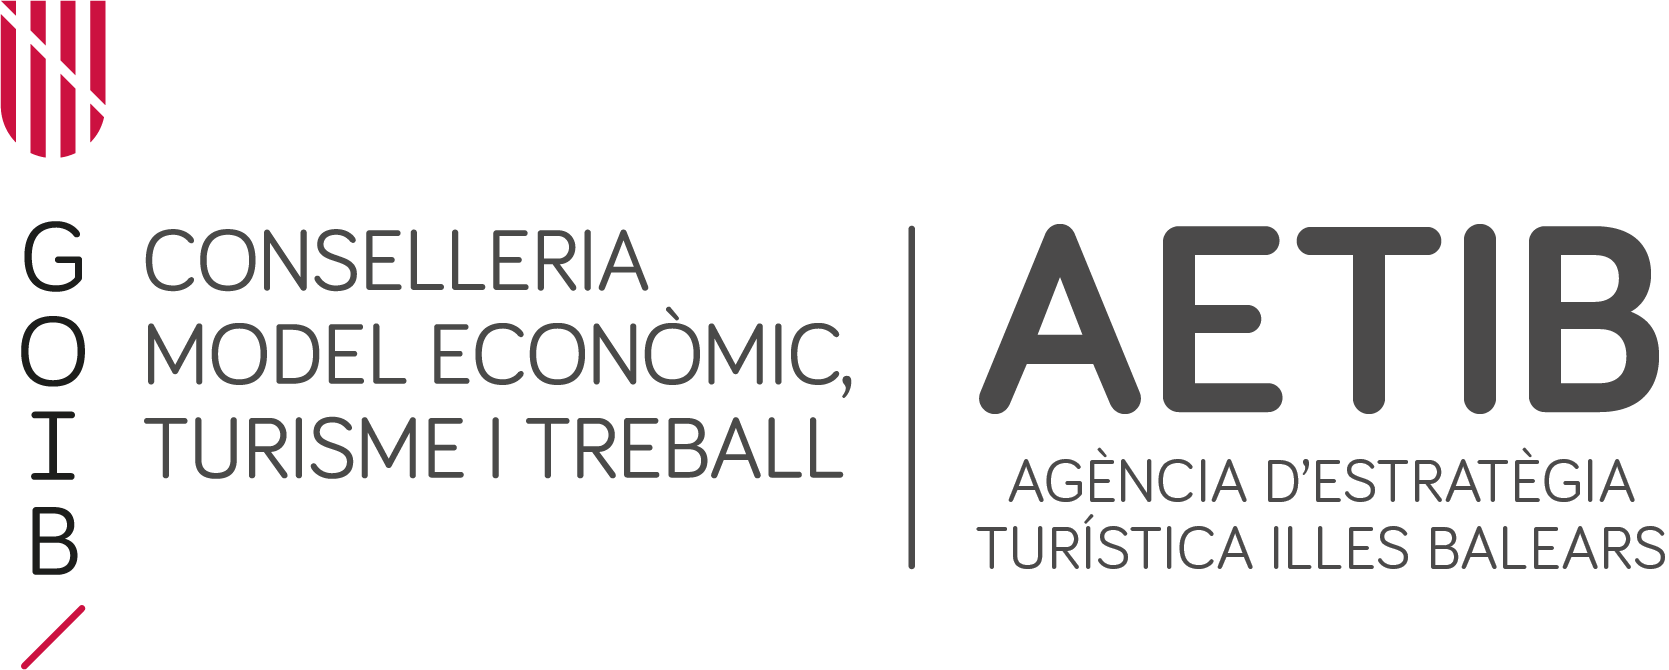 Agència d'Estratègia Turística Illes Balears (AETIB)